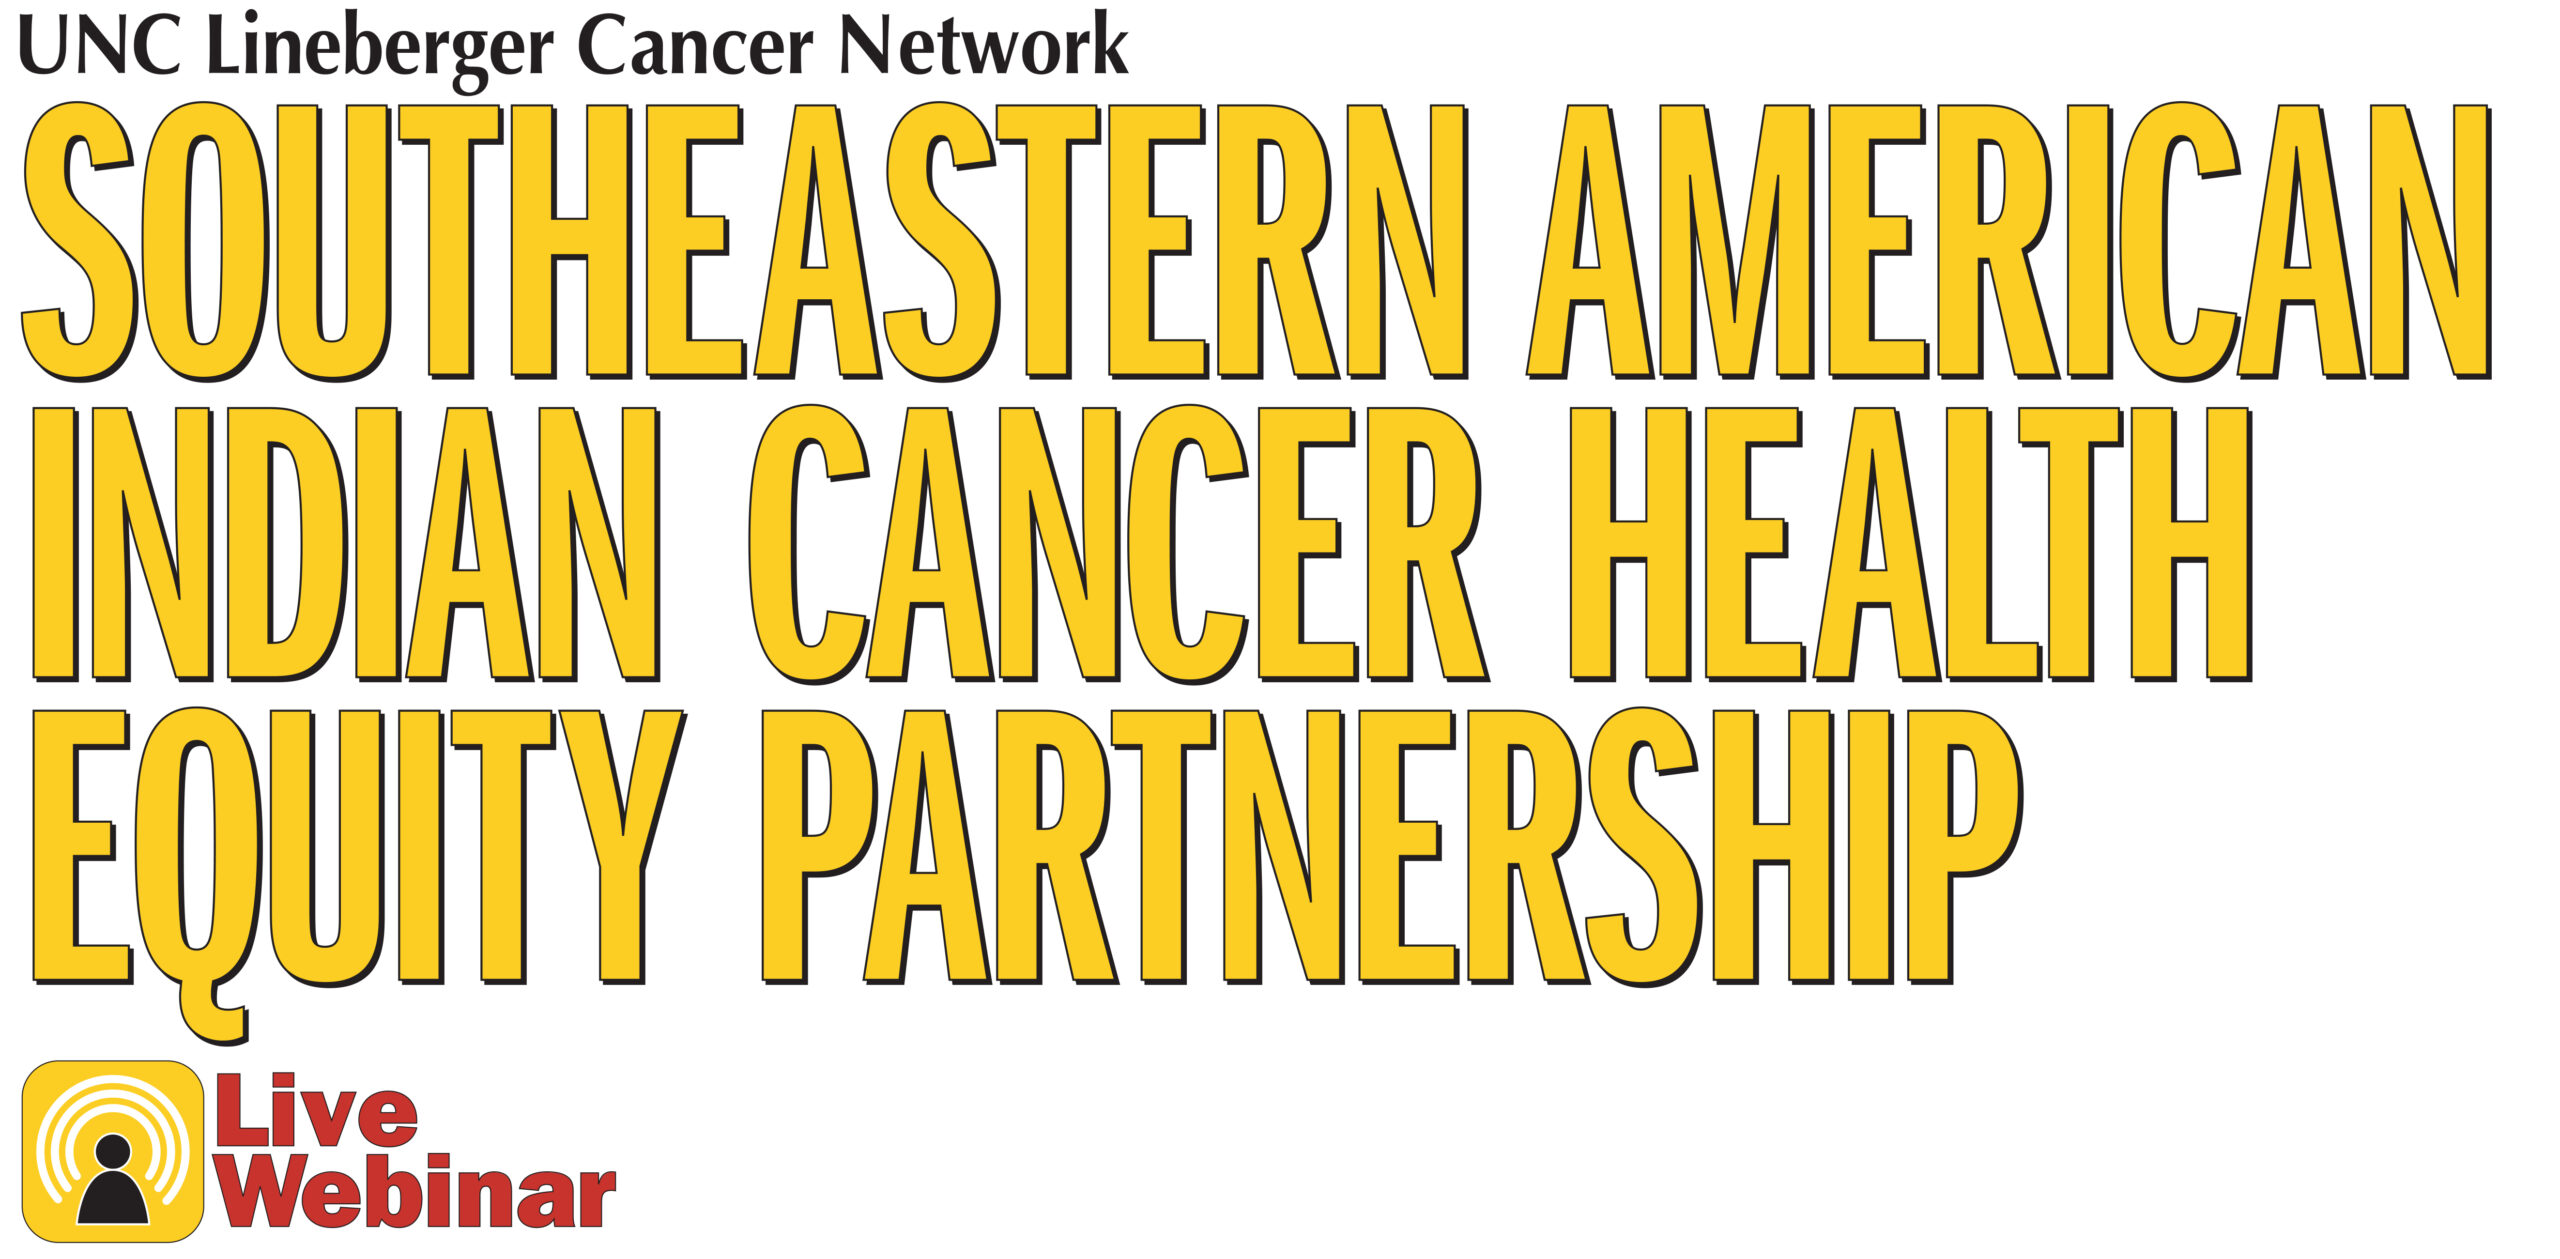 UNCLCN Presents a Southeastern American Indian Cancer Health Equity Partnership Webinar